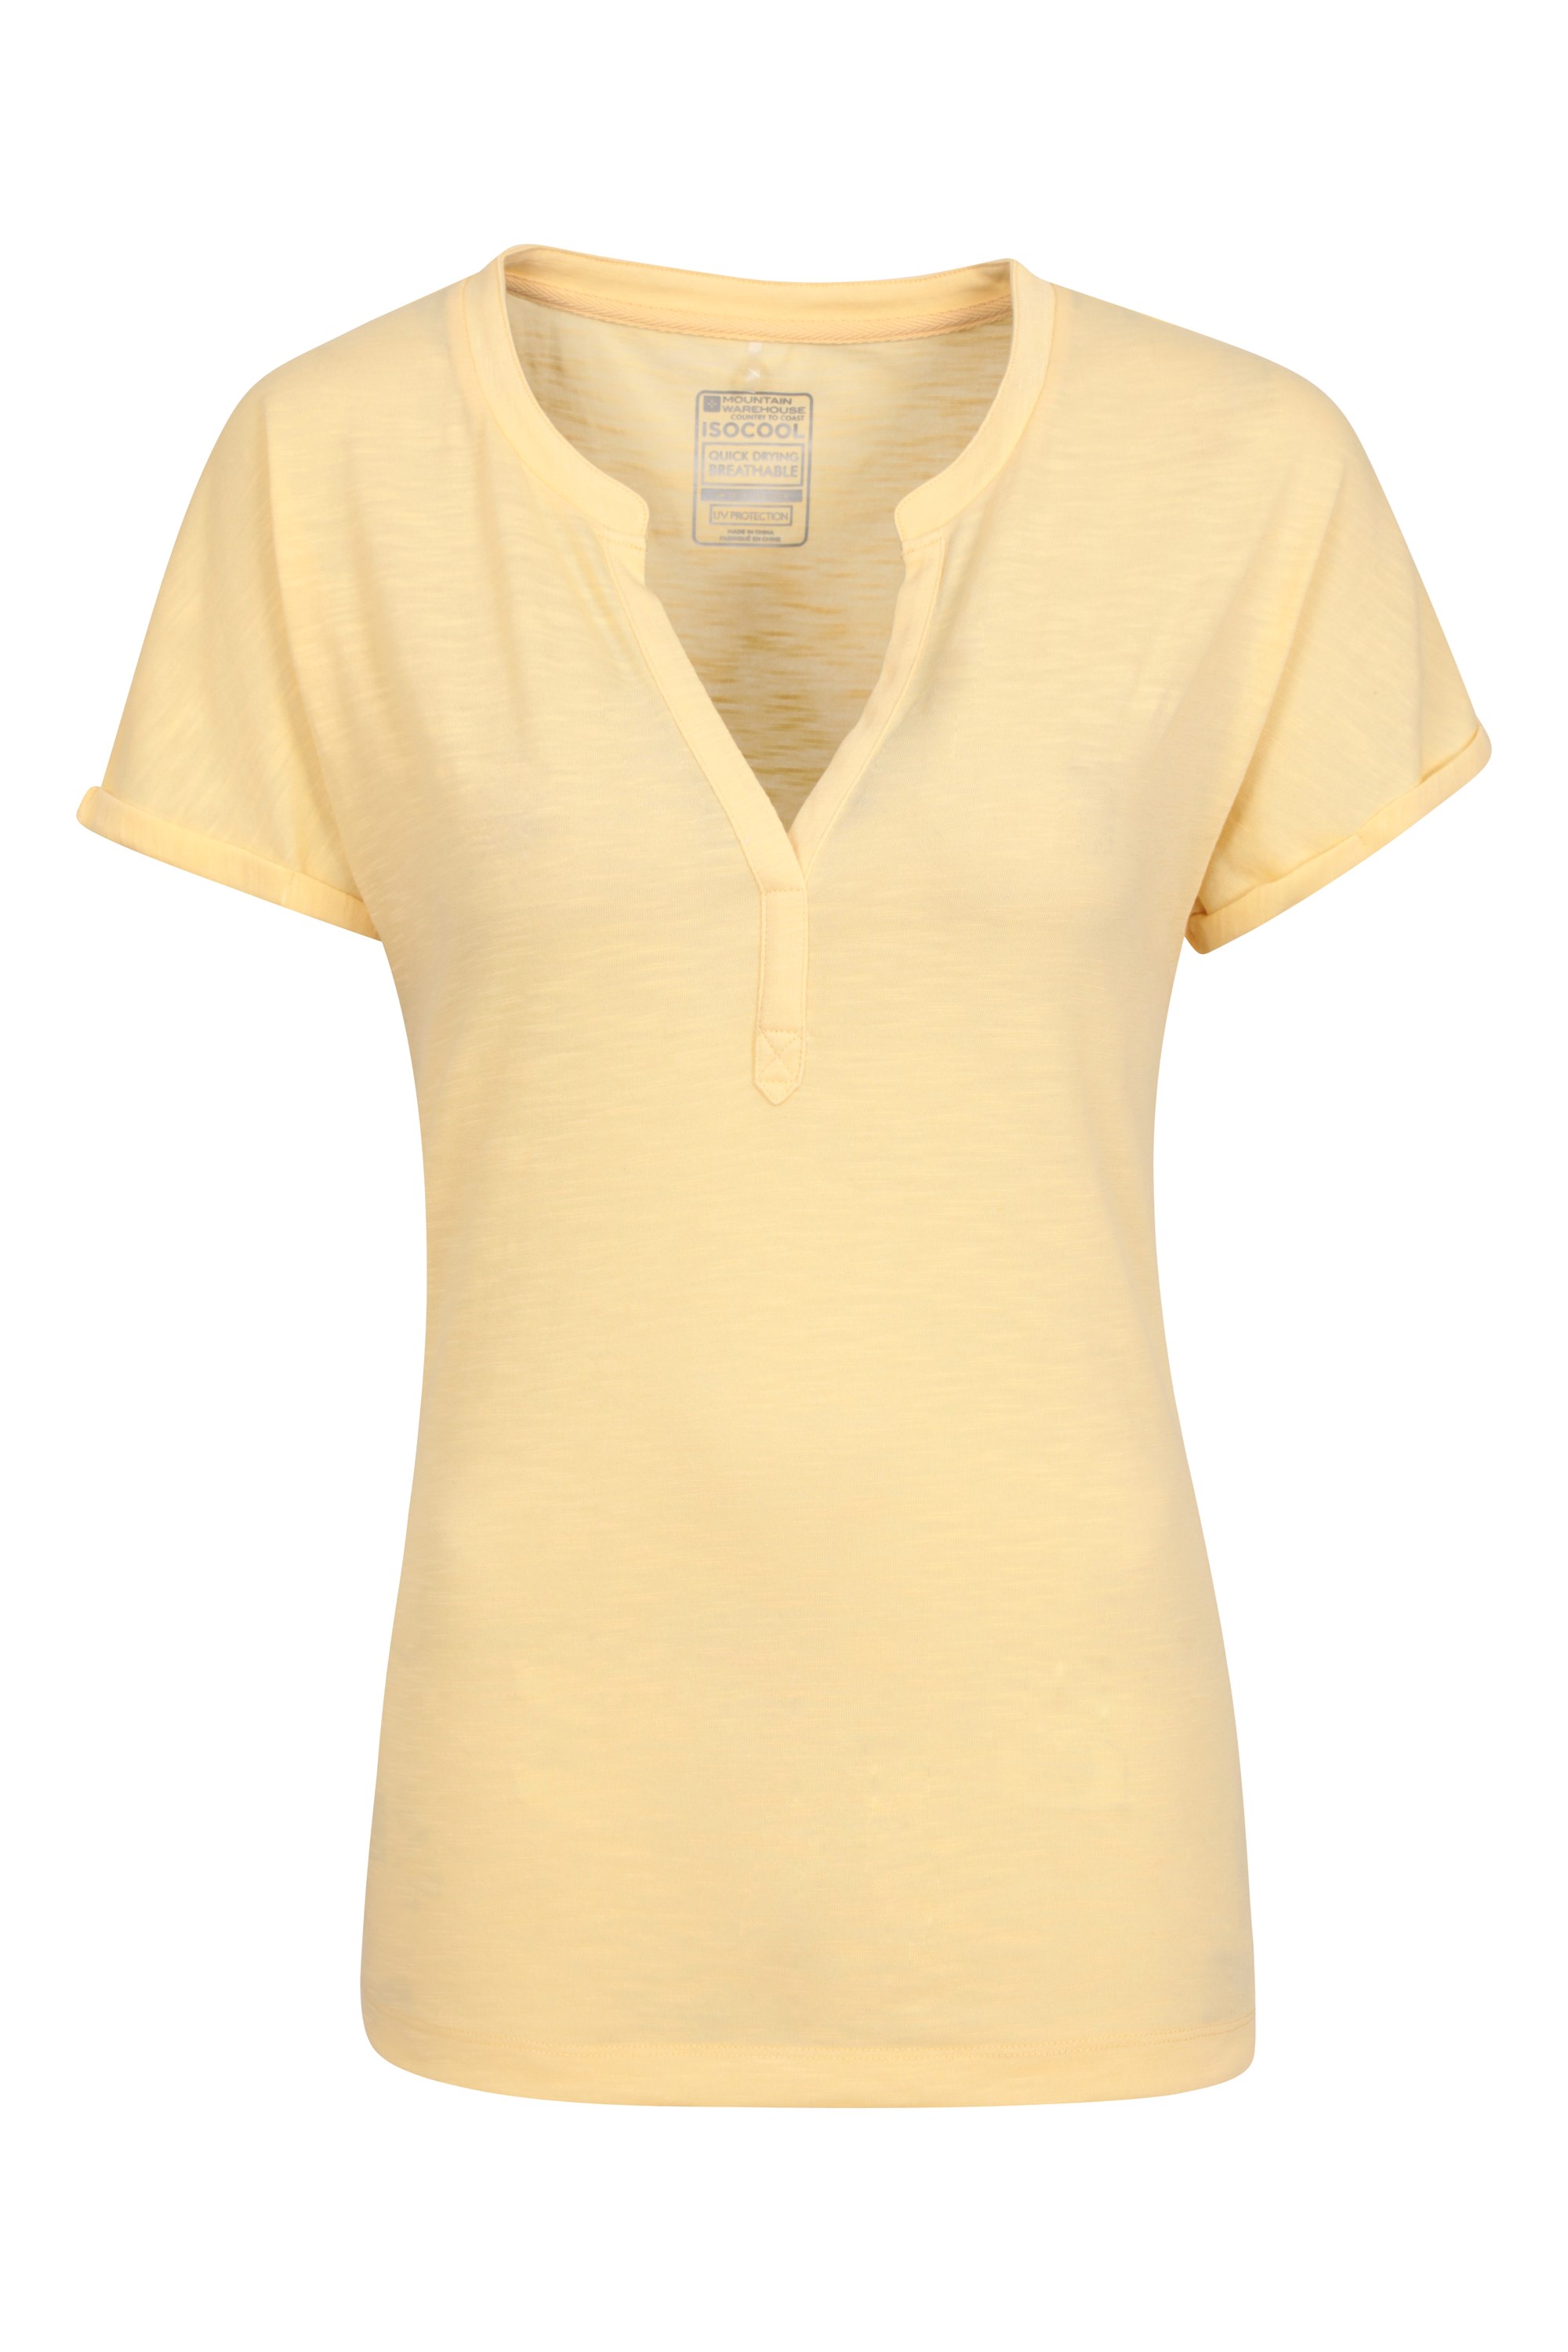 Skye Quick-dry Womens Slub T-shirt - Yellow